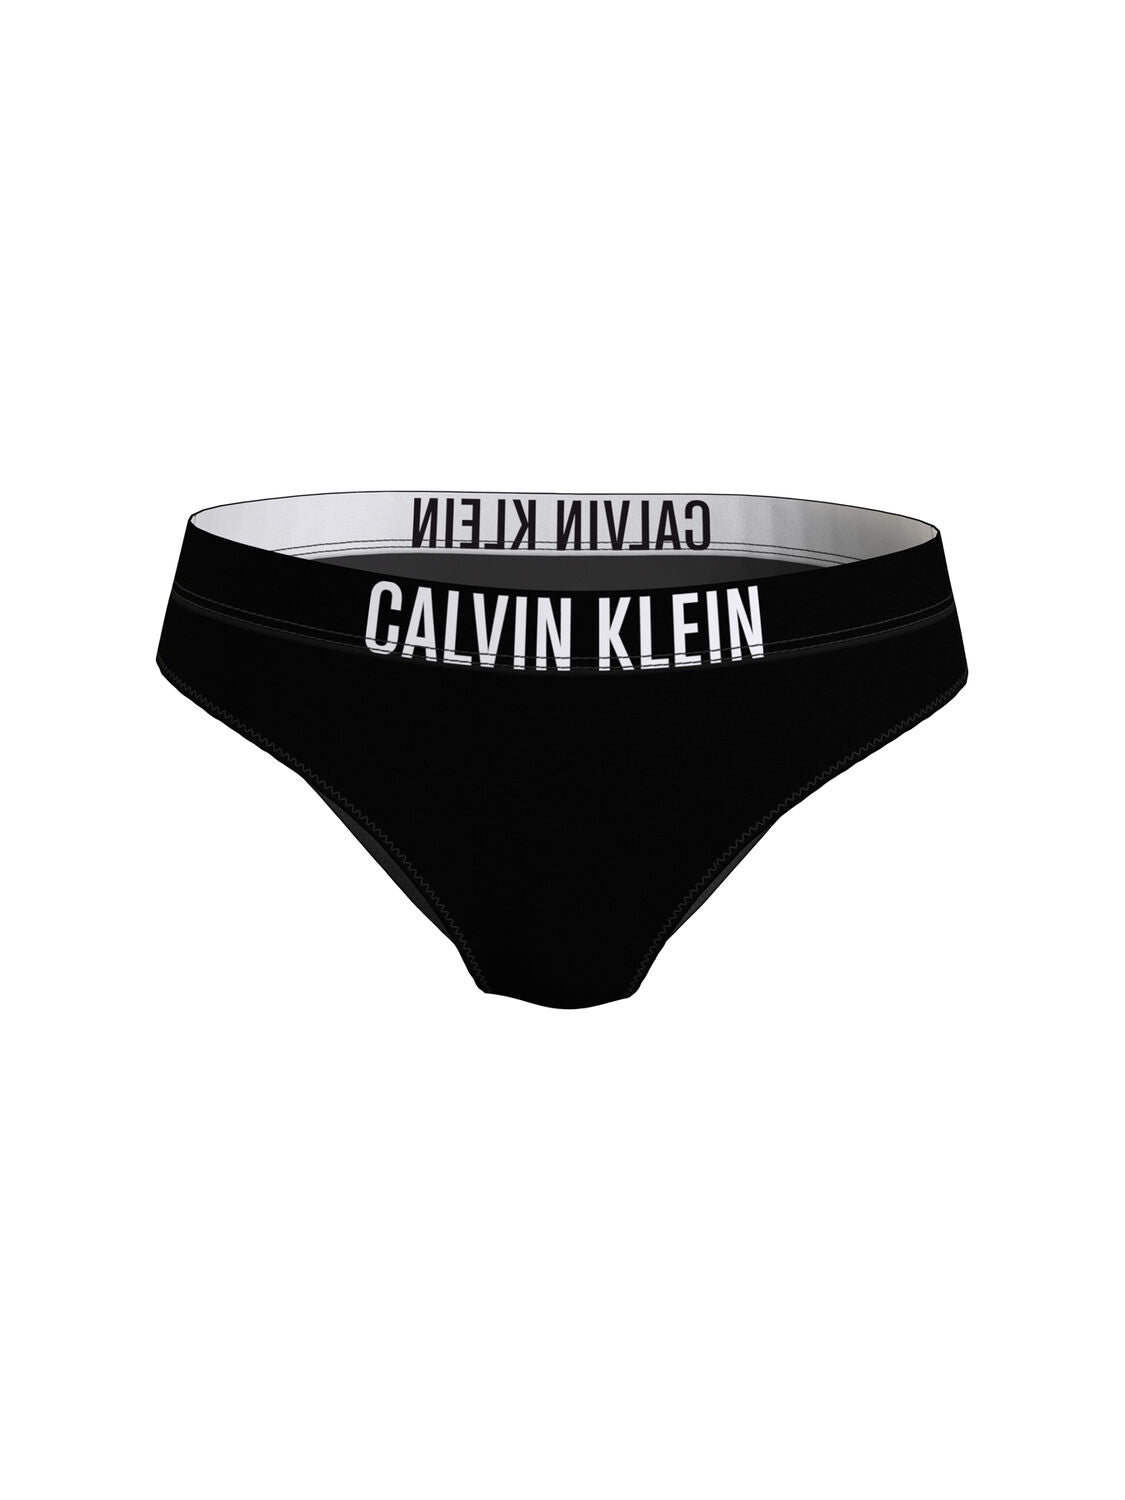 CALVIN KLEIN CLASSIC BIKINI BOTTOM Bikinihousut